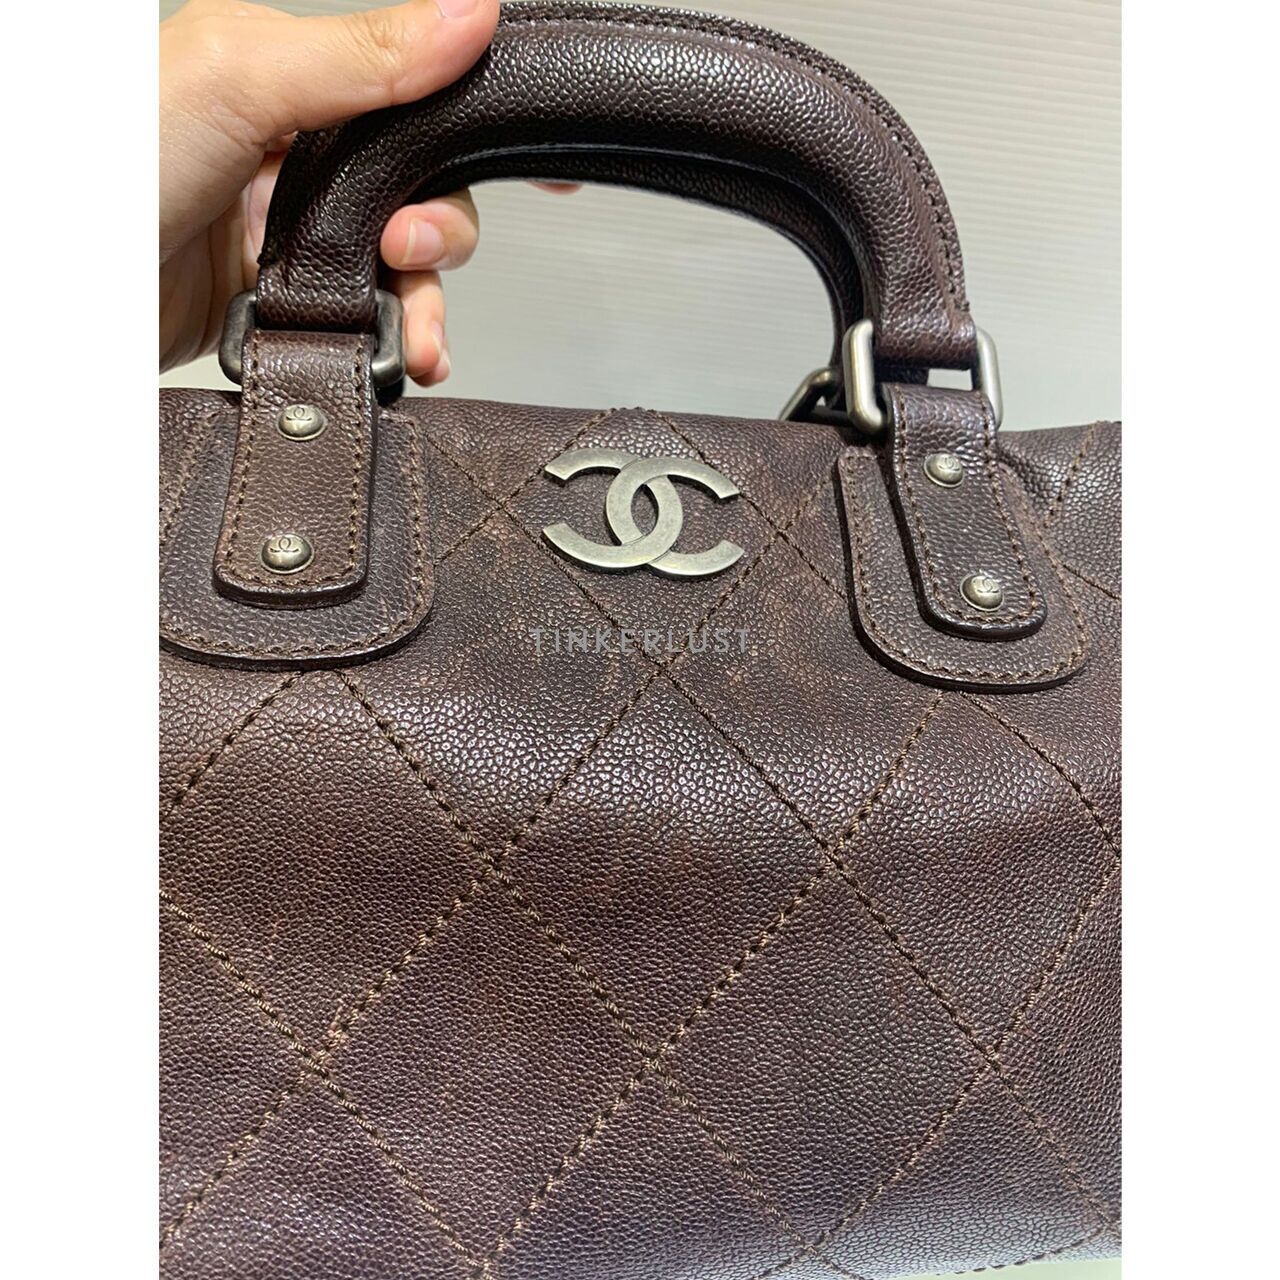 Chanel Duffle Dark Brown Caviar PHW #10 Handbag